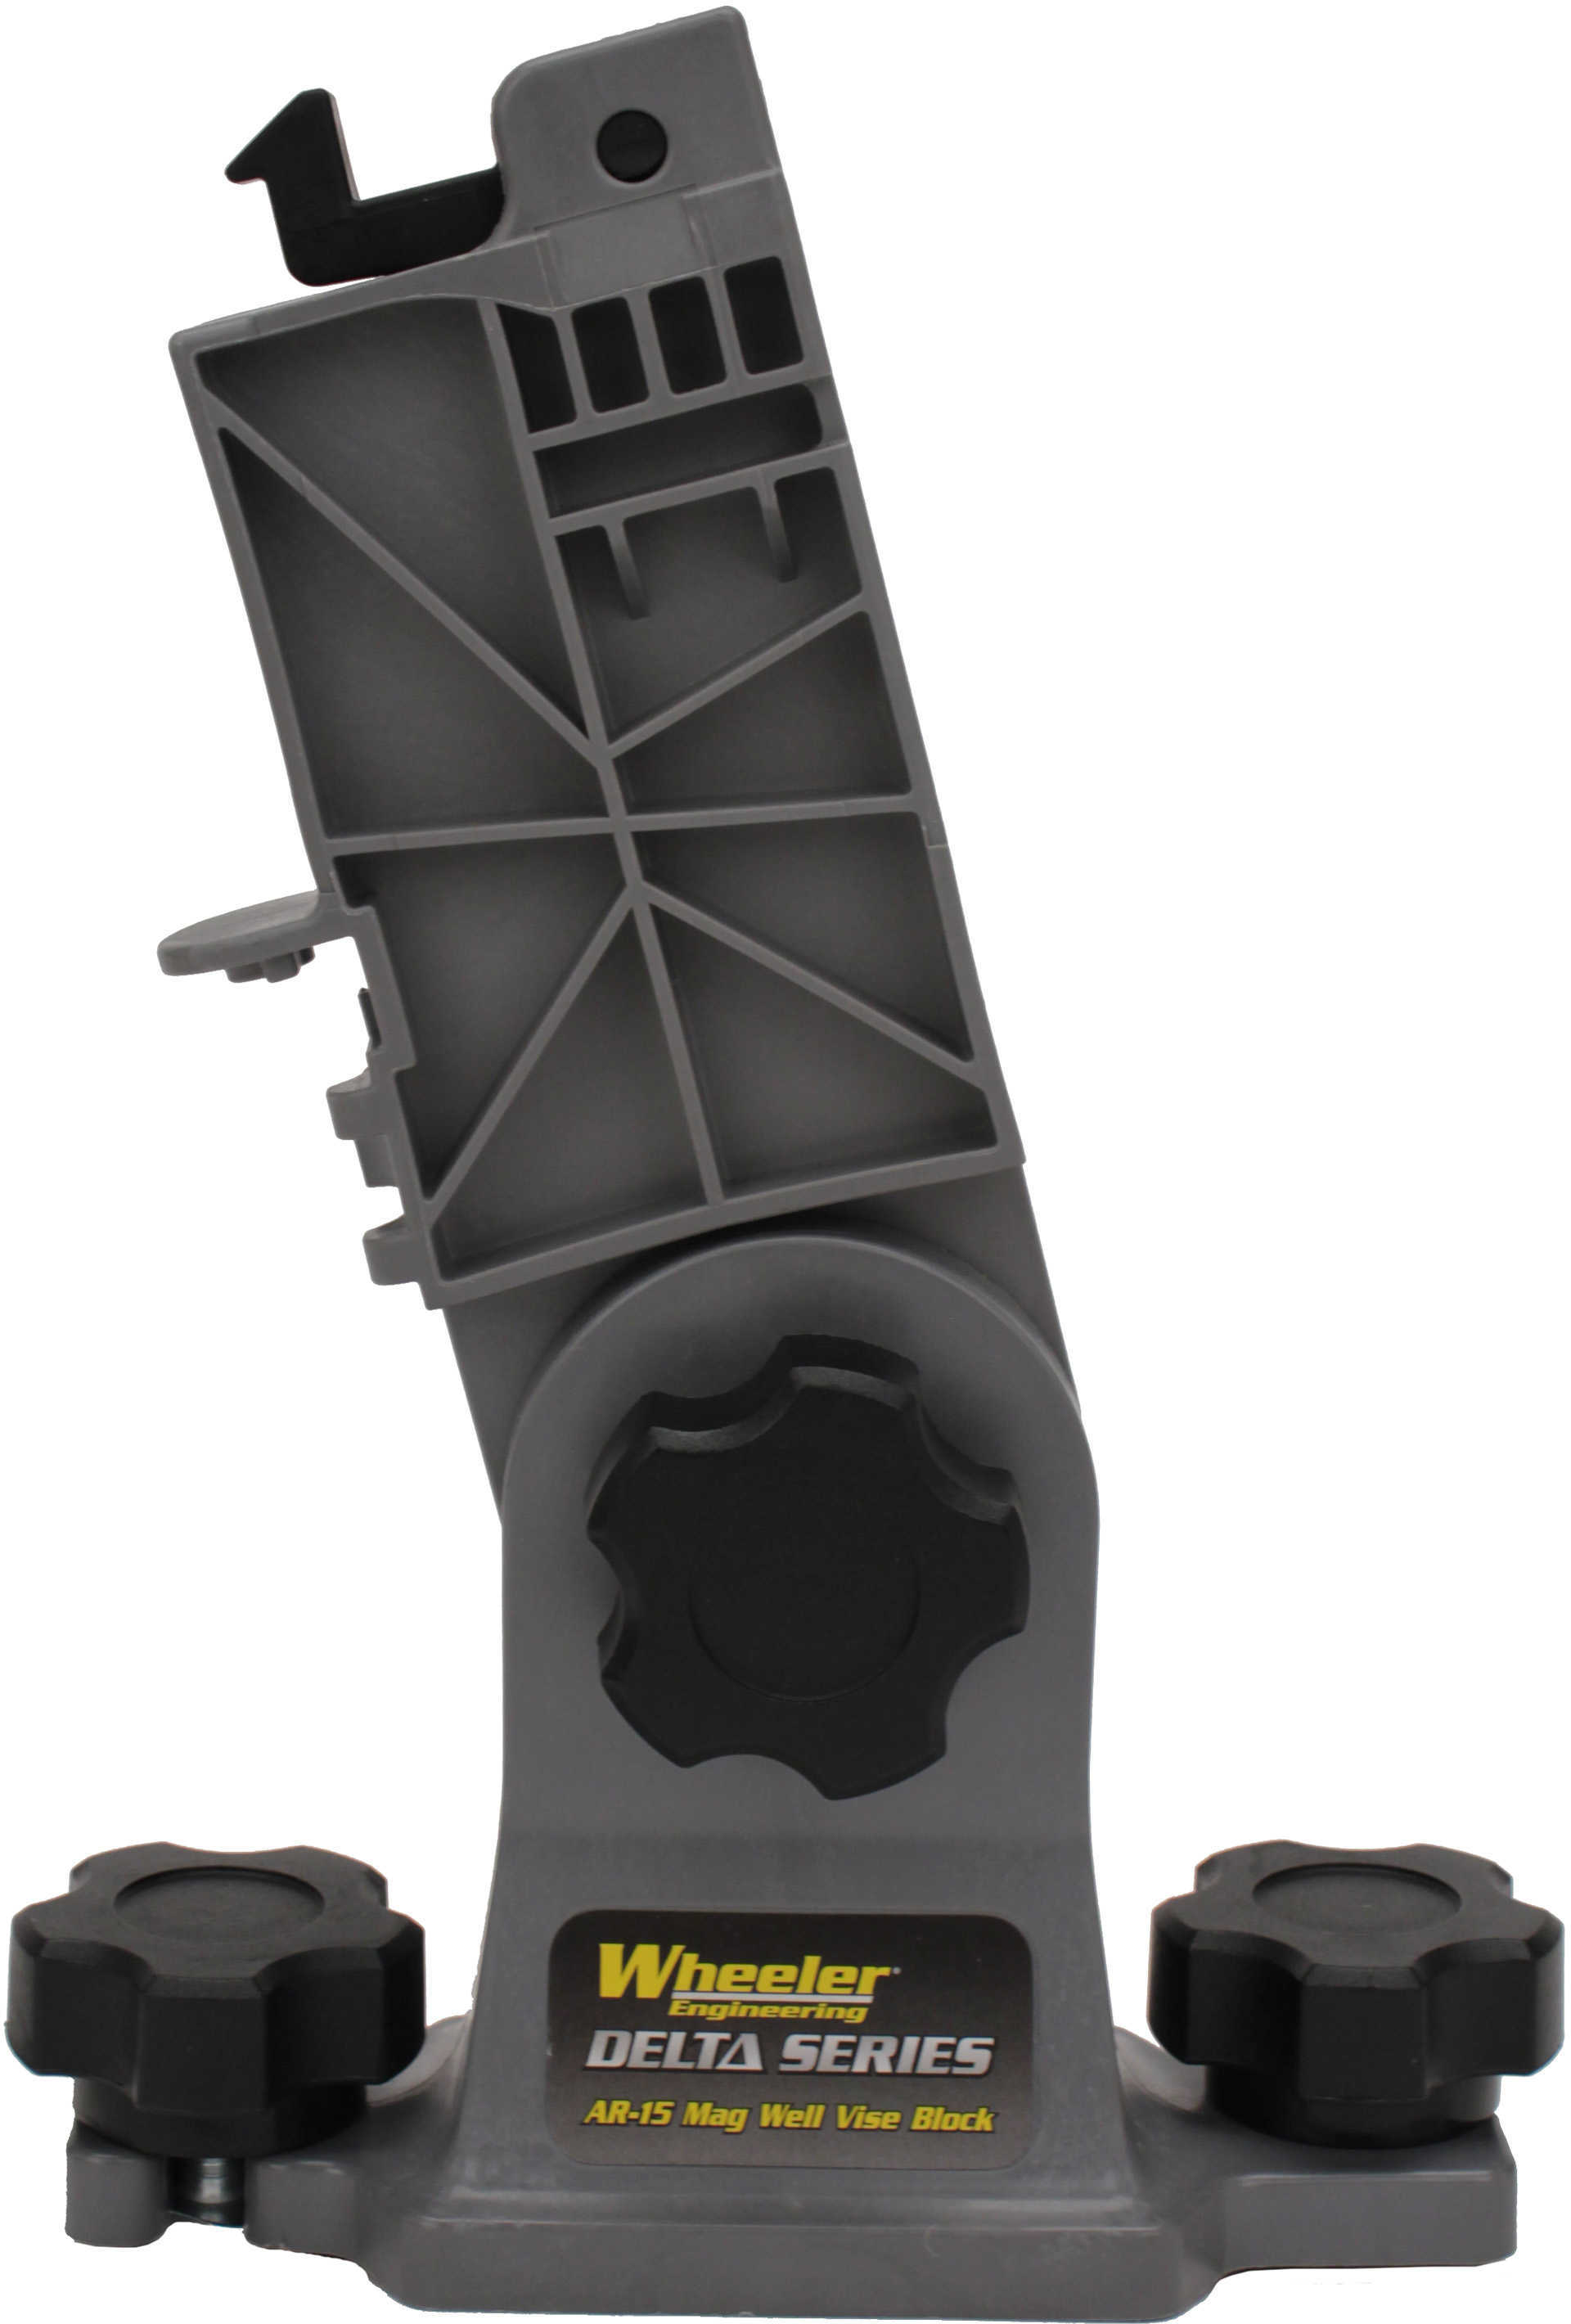 Wheeler Delta Series Tool Bench Vise Block For AR-15 156211